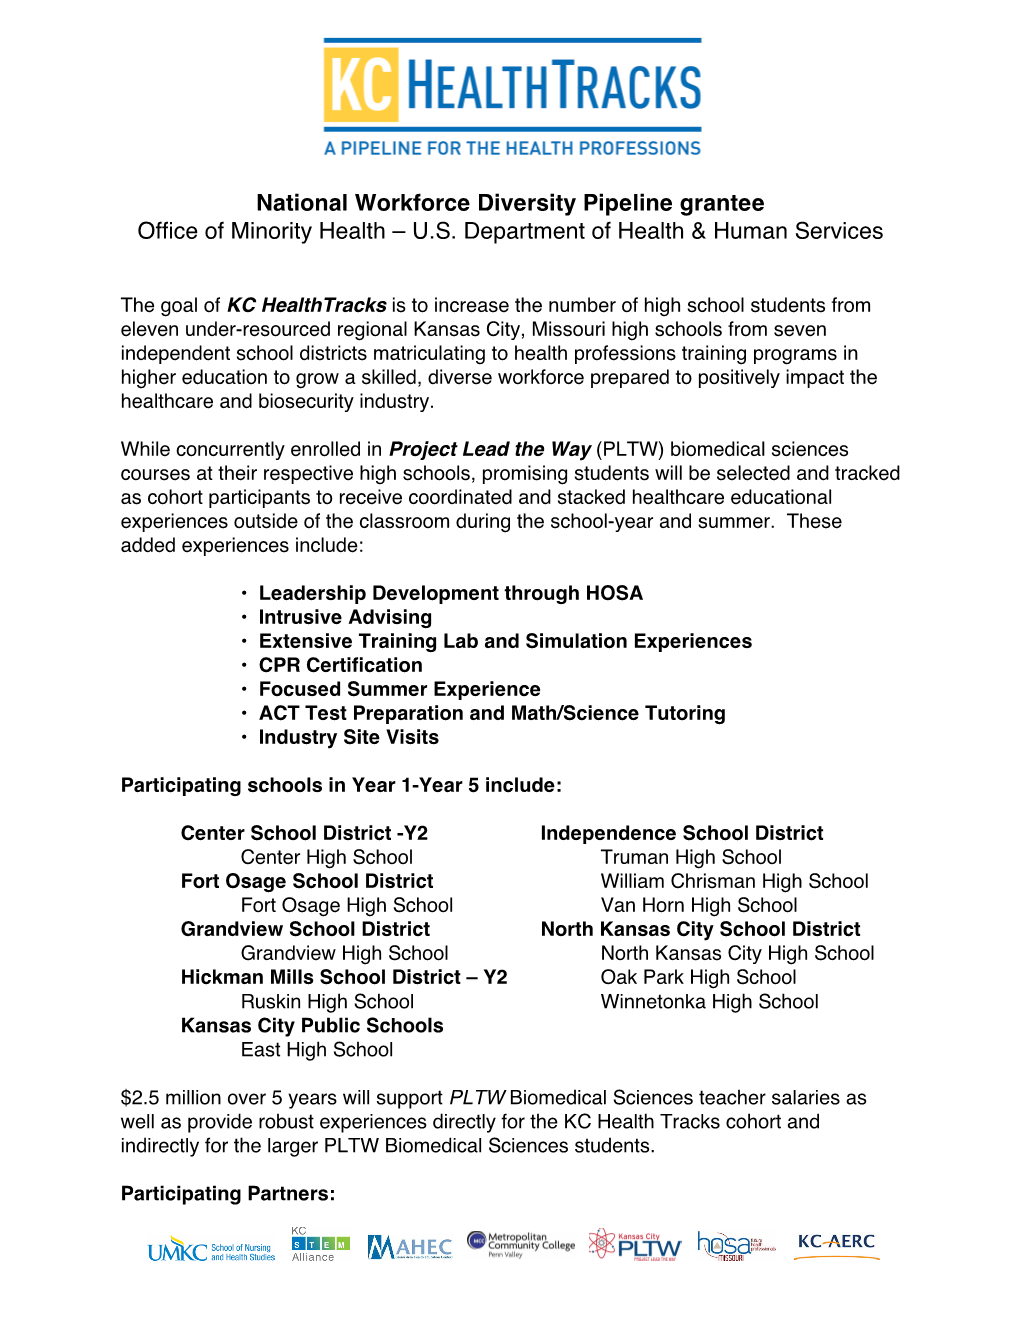 National Workforce Diversity Pipeline Grantee Office of Minority Health – U.S